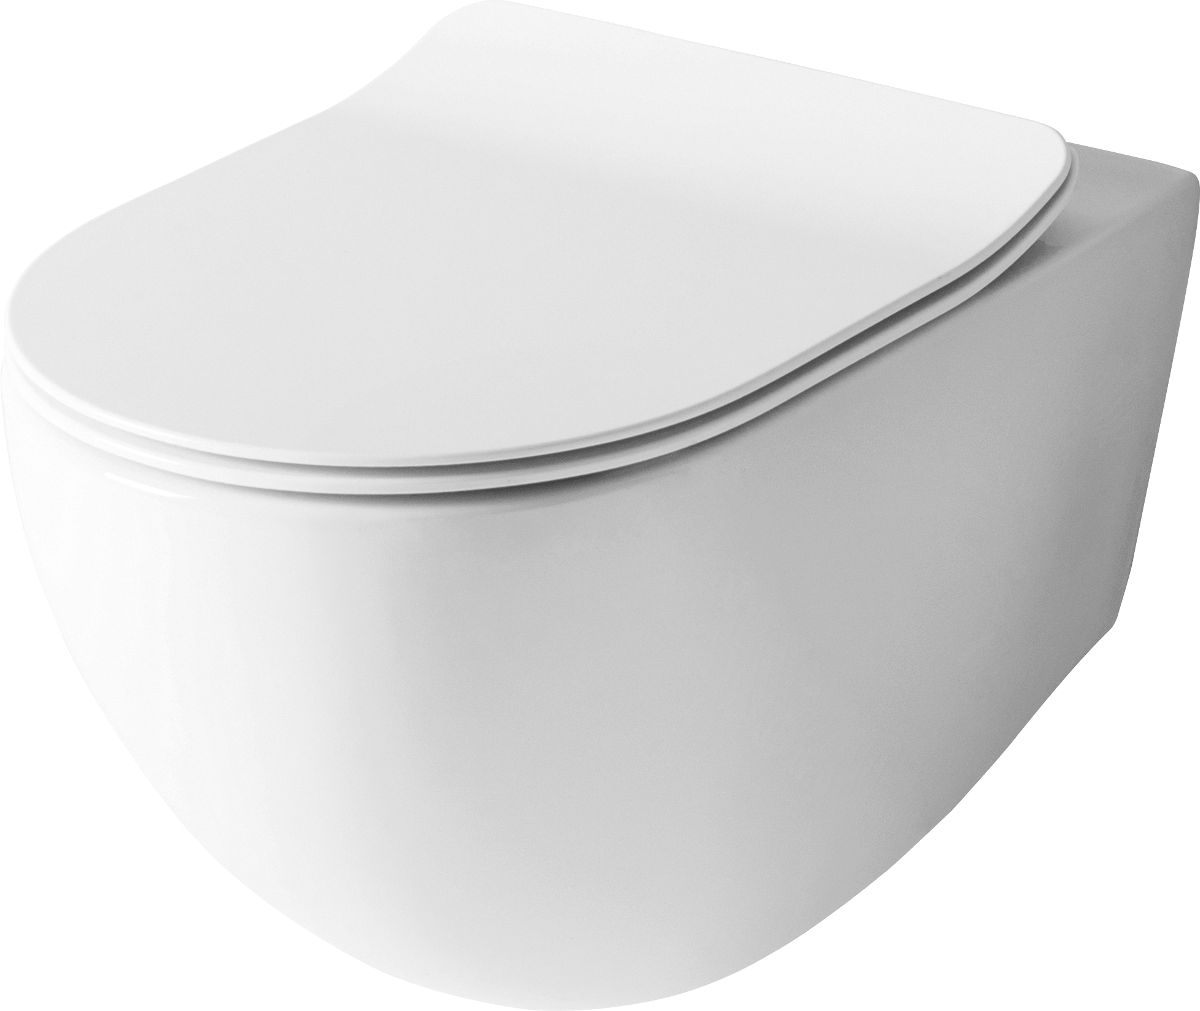 Art Ceram File 2.0 záchodová mísa závěsný Bez oplachového kruhu bílá FLV00405;30